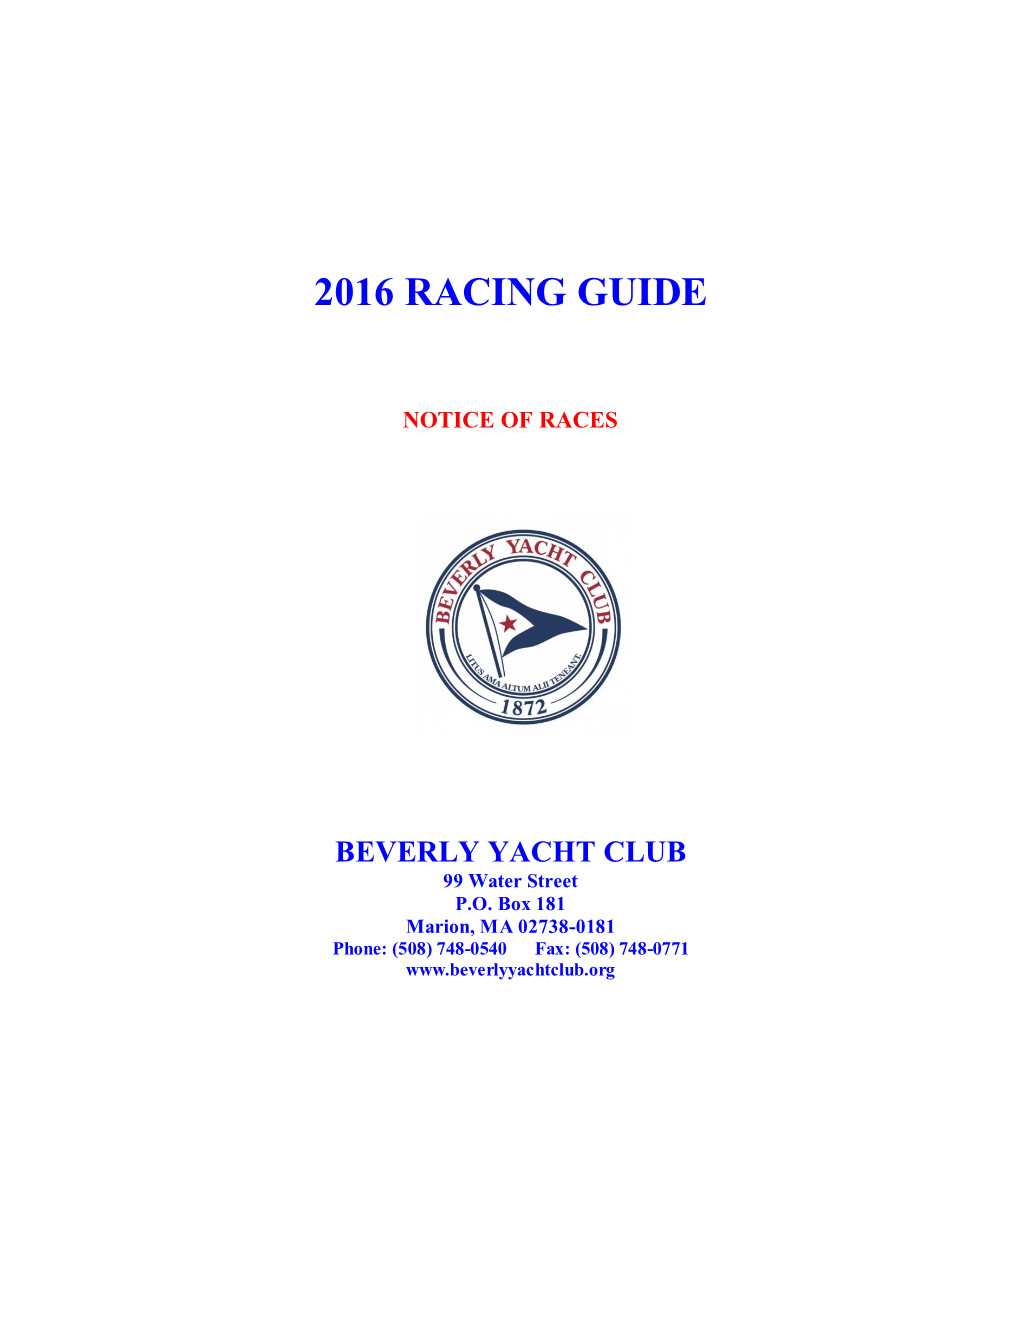 2016 Racing Guide FINAL